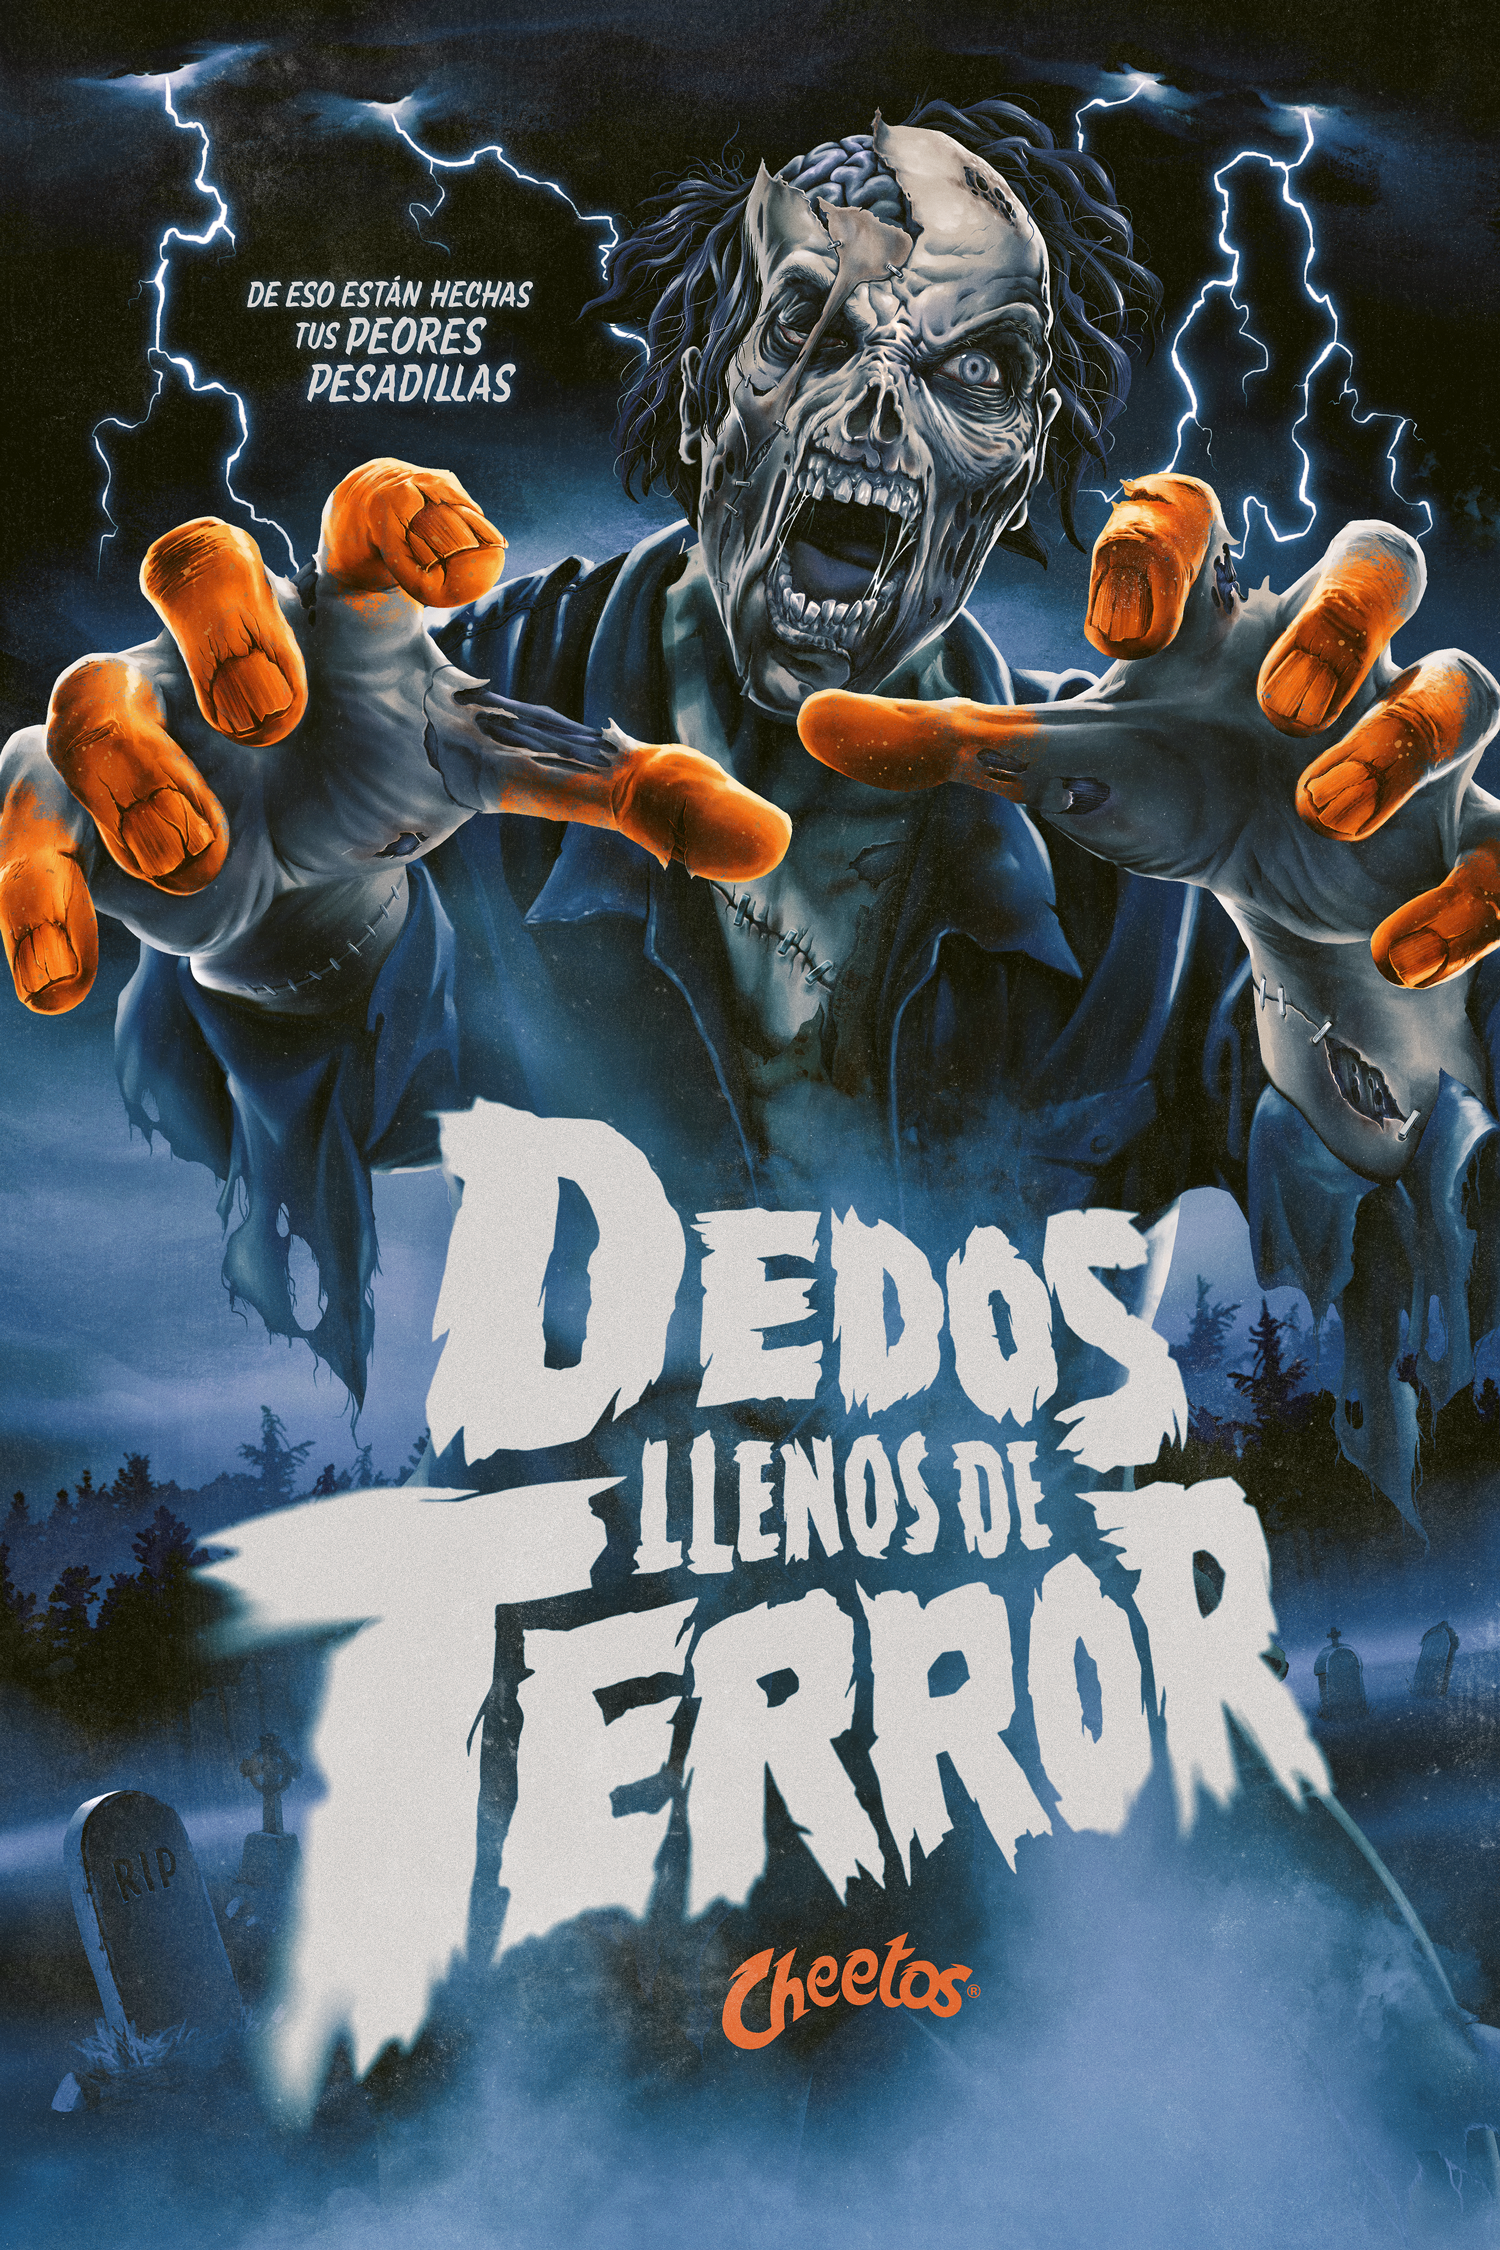 CHEETOS-—DEDOS-LLENOS-DE-TERROR-—Poster-ZOMBIE-—OUT-—RGB.png